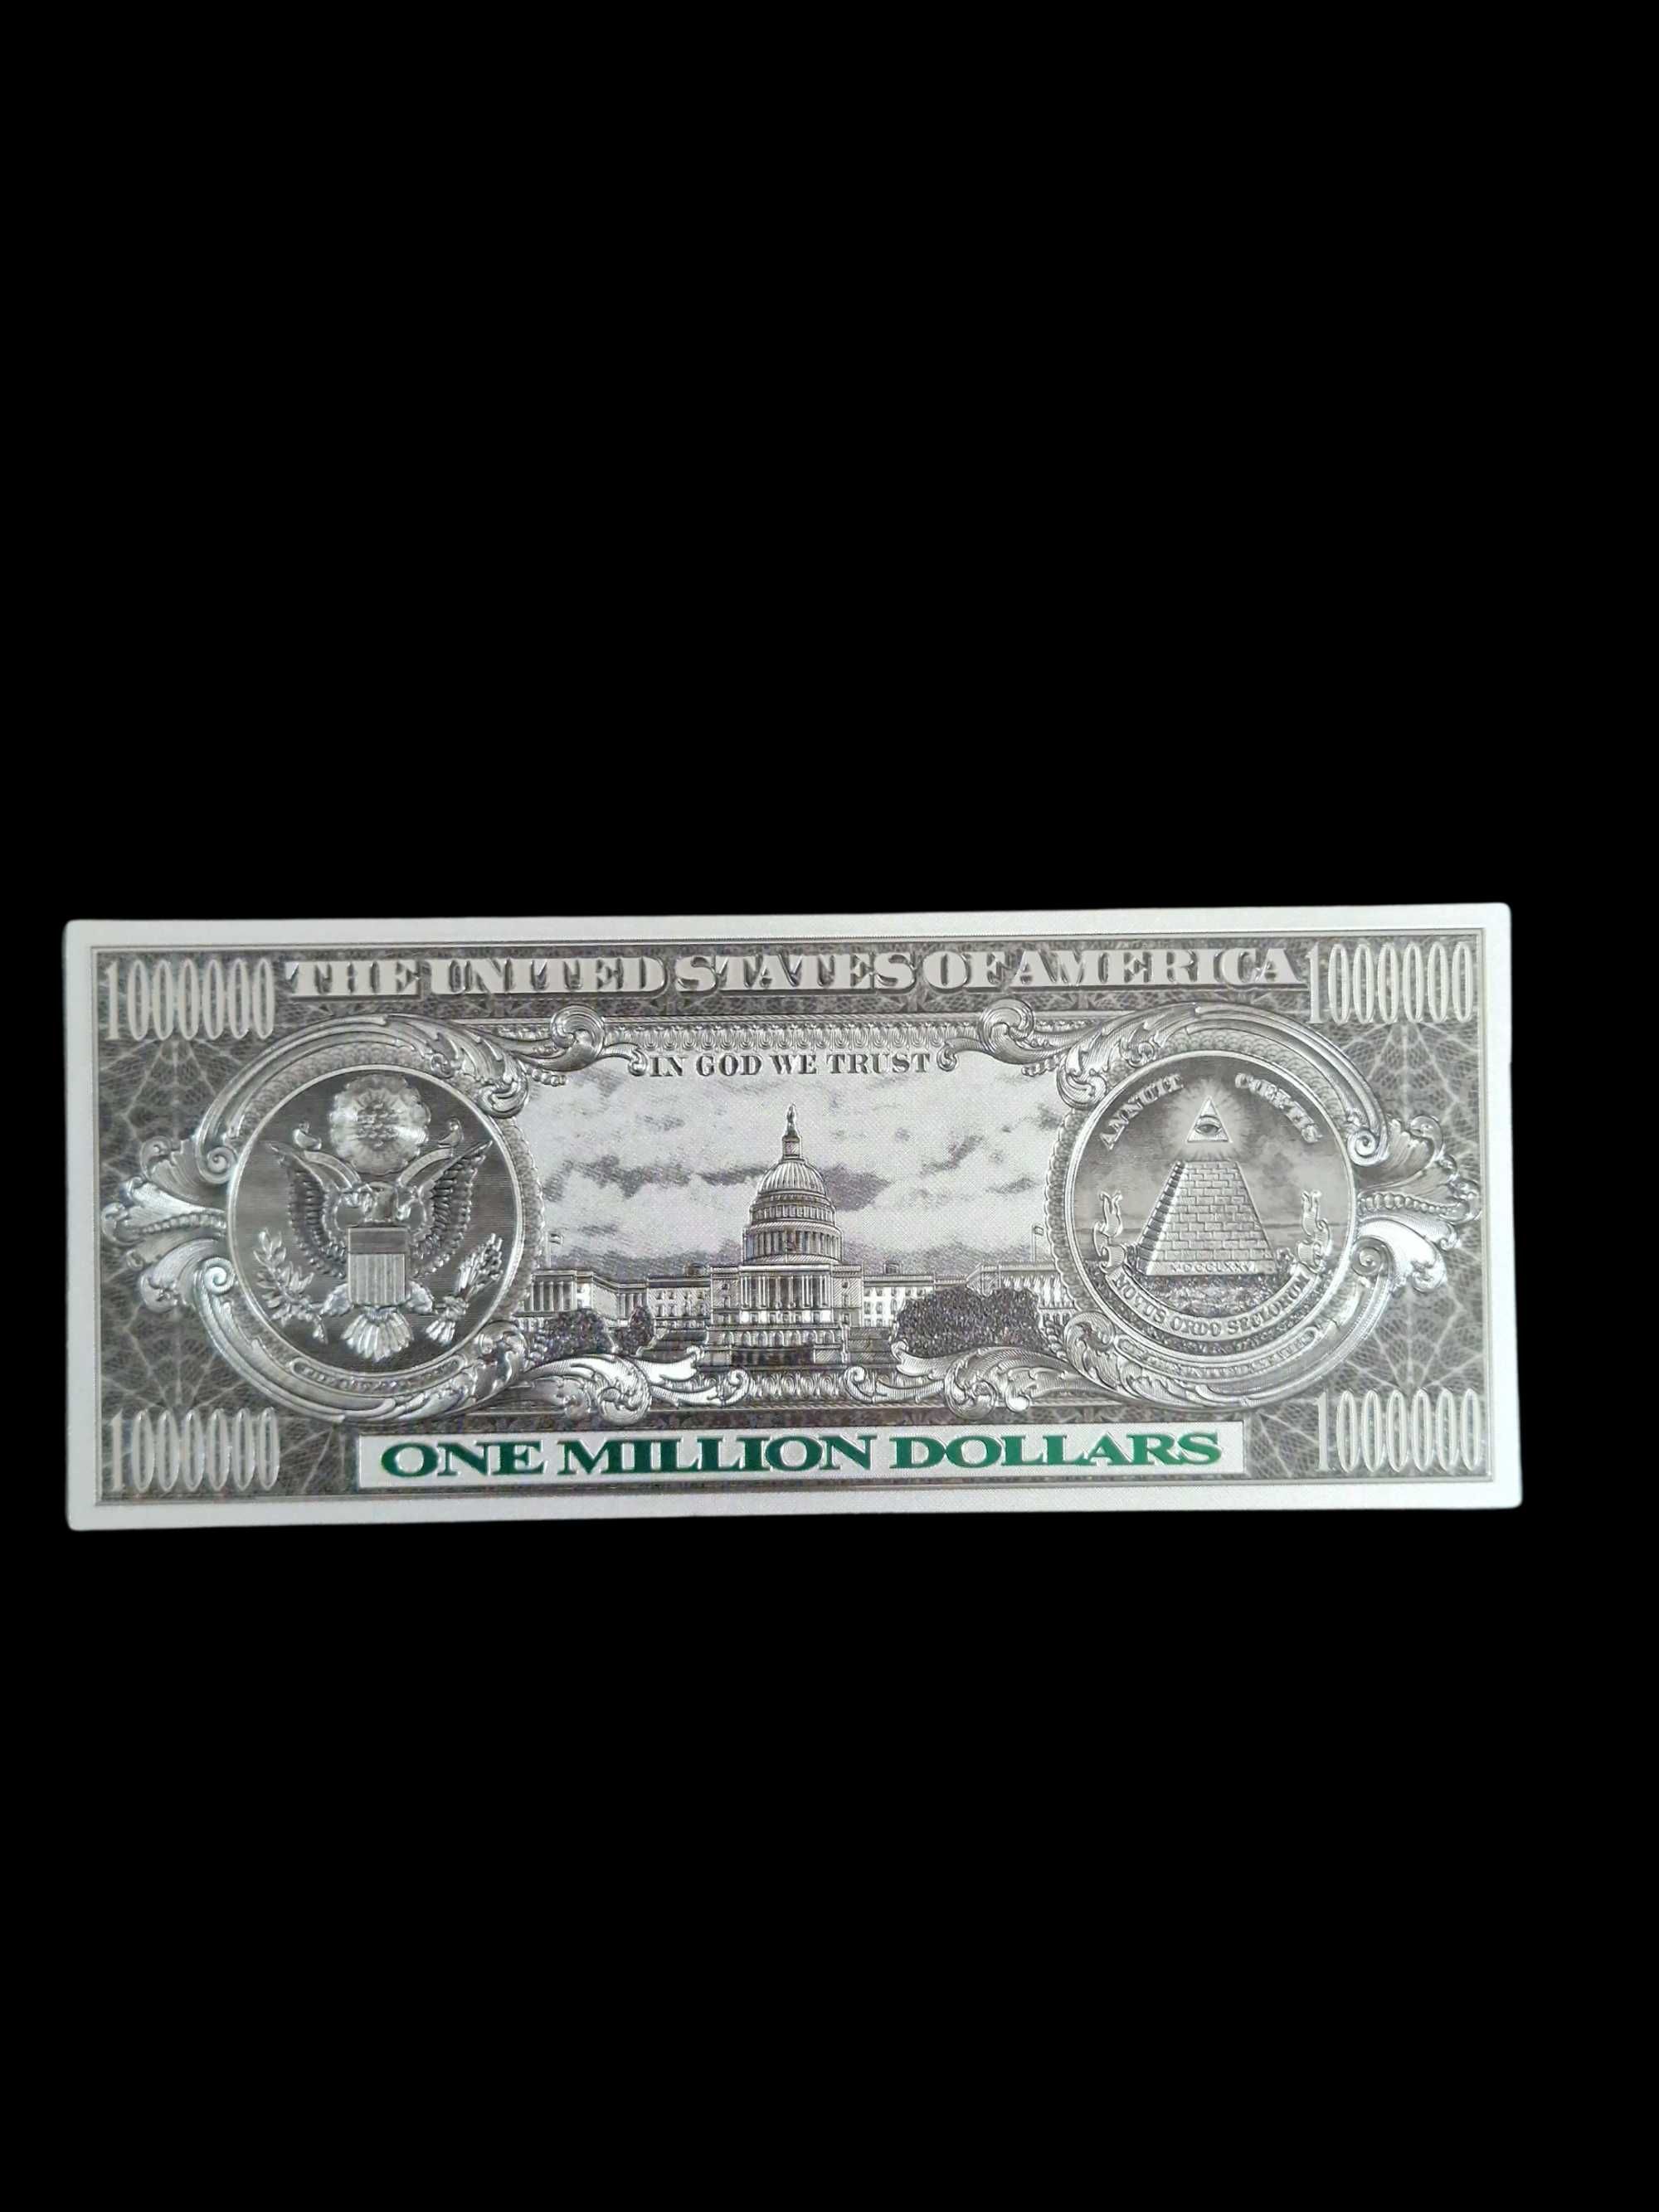 Bancnota colectie cadou decorativa 1.000.000 Dolari SUA Silver Edition